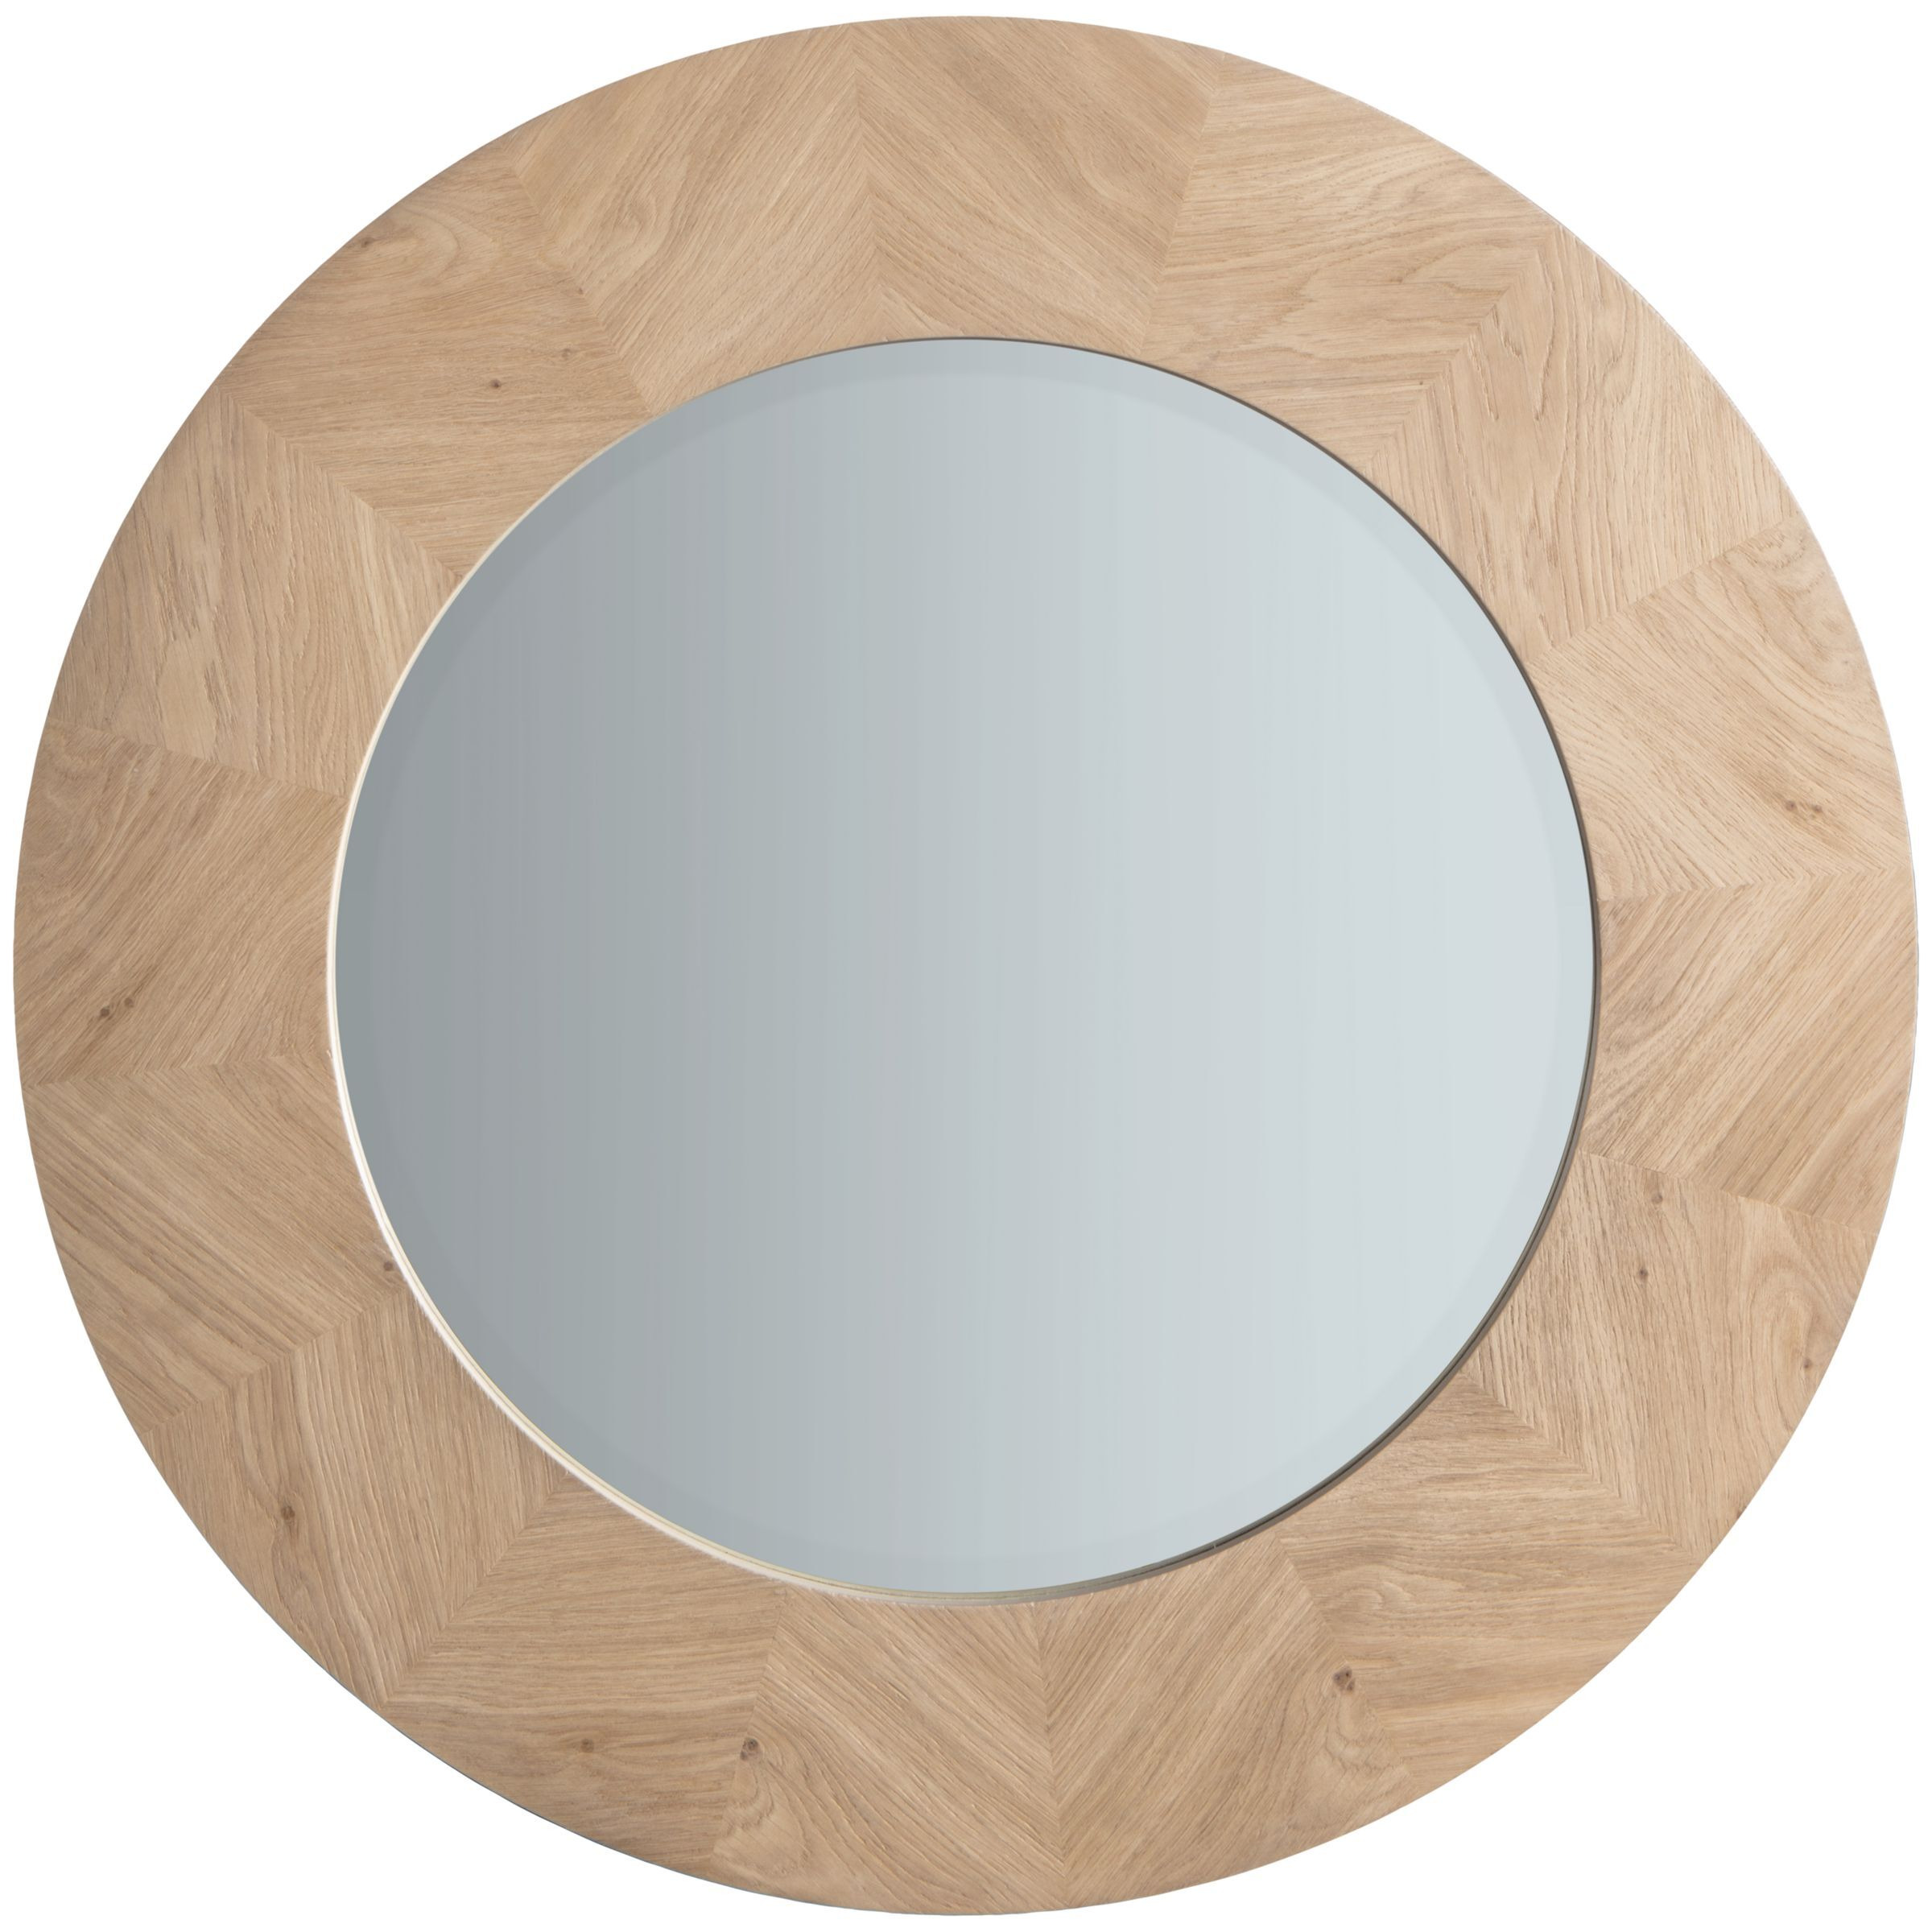 Gallery Direct Tapio Wood Inlay Round Mirror, 90cm, Oak by John Lewis &  Partners 